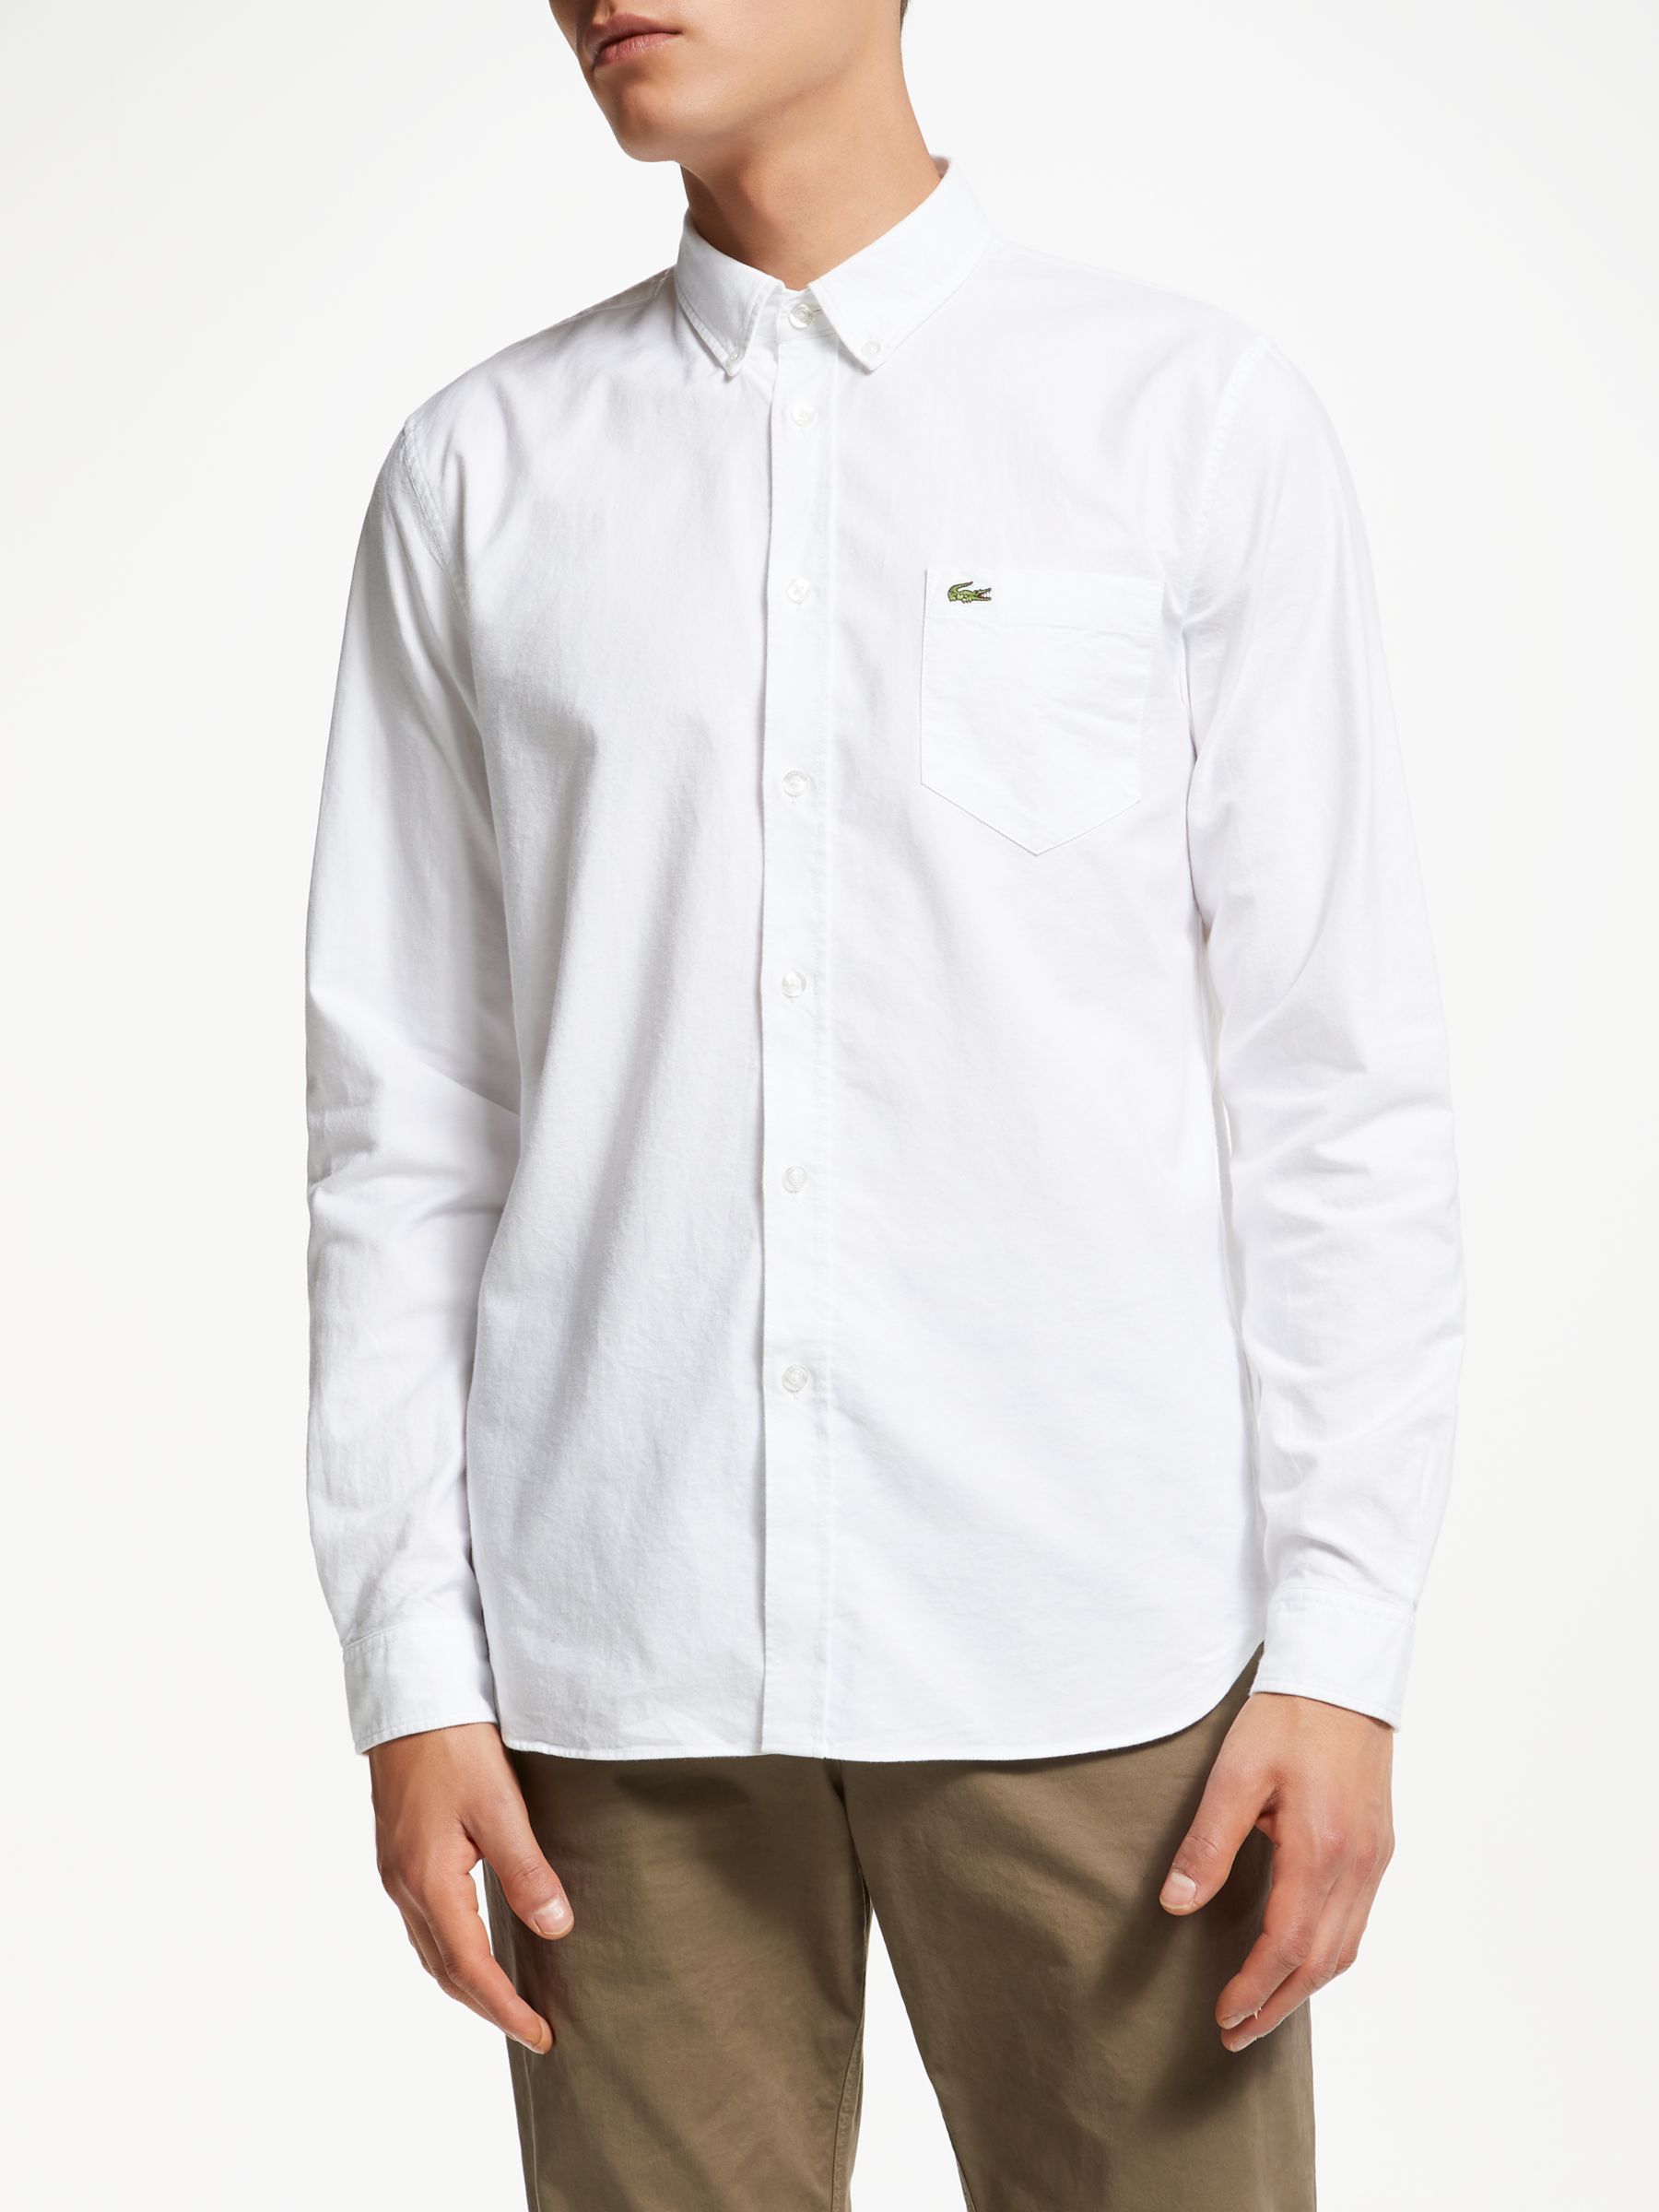 white long sleeve lacoste shirt